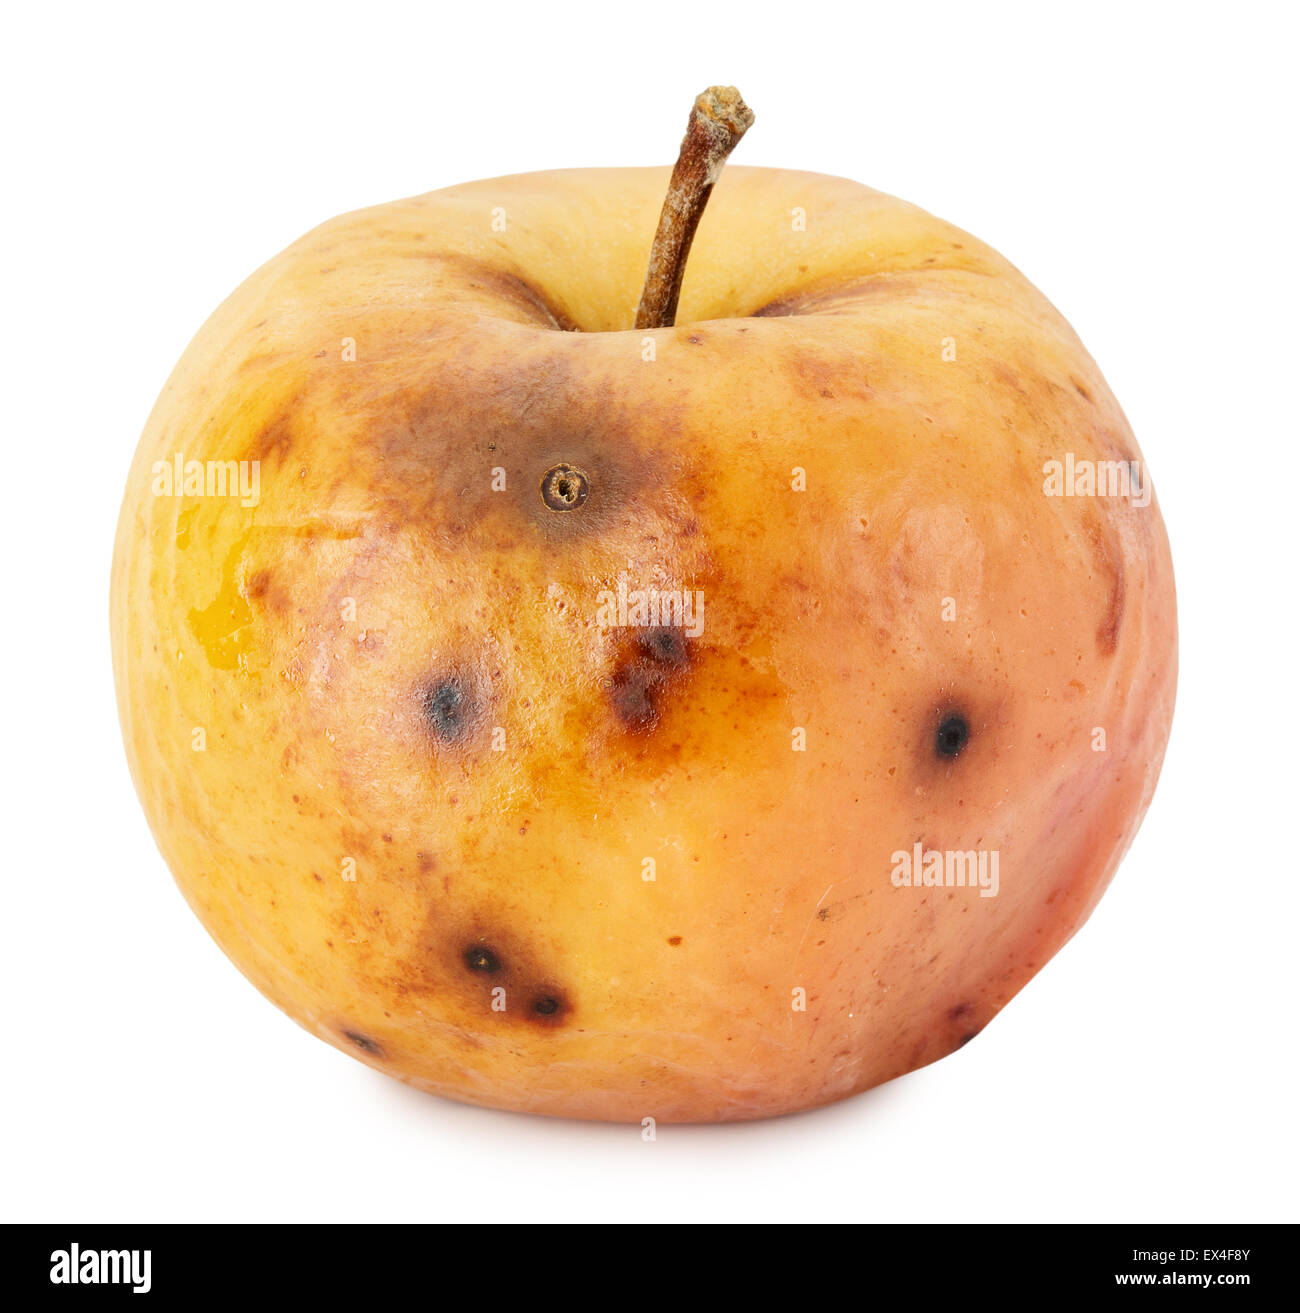 baked apple isolated on the white background. Stock Photo